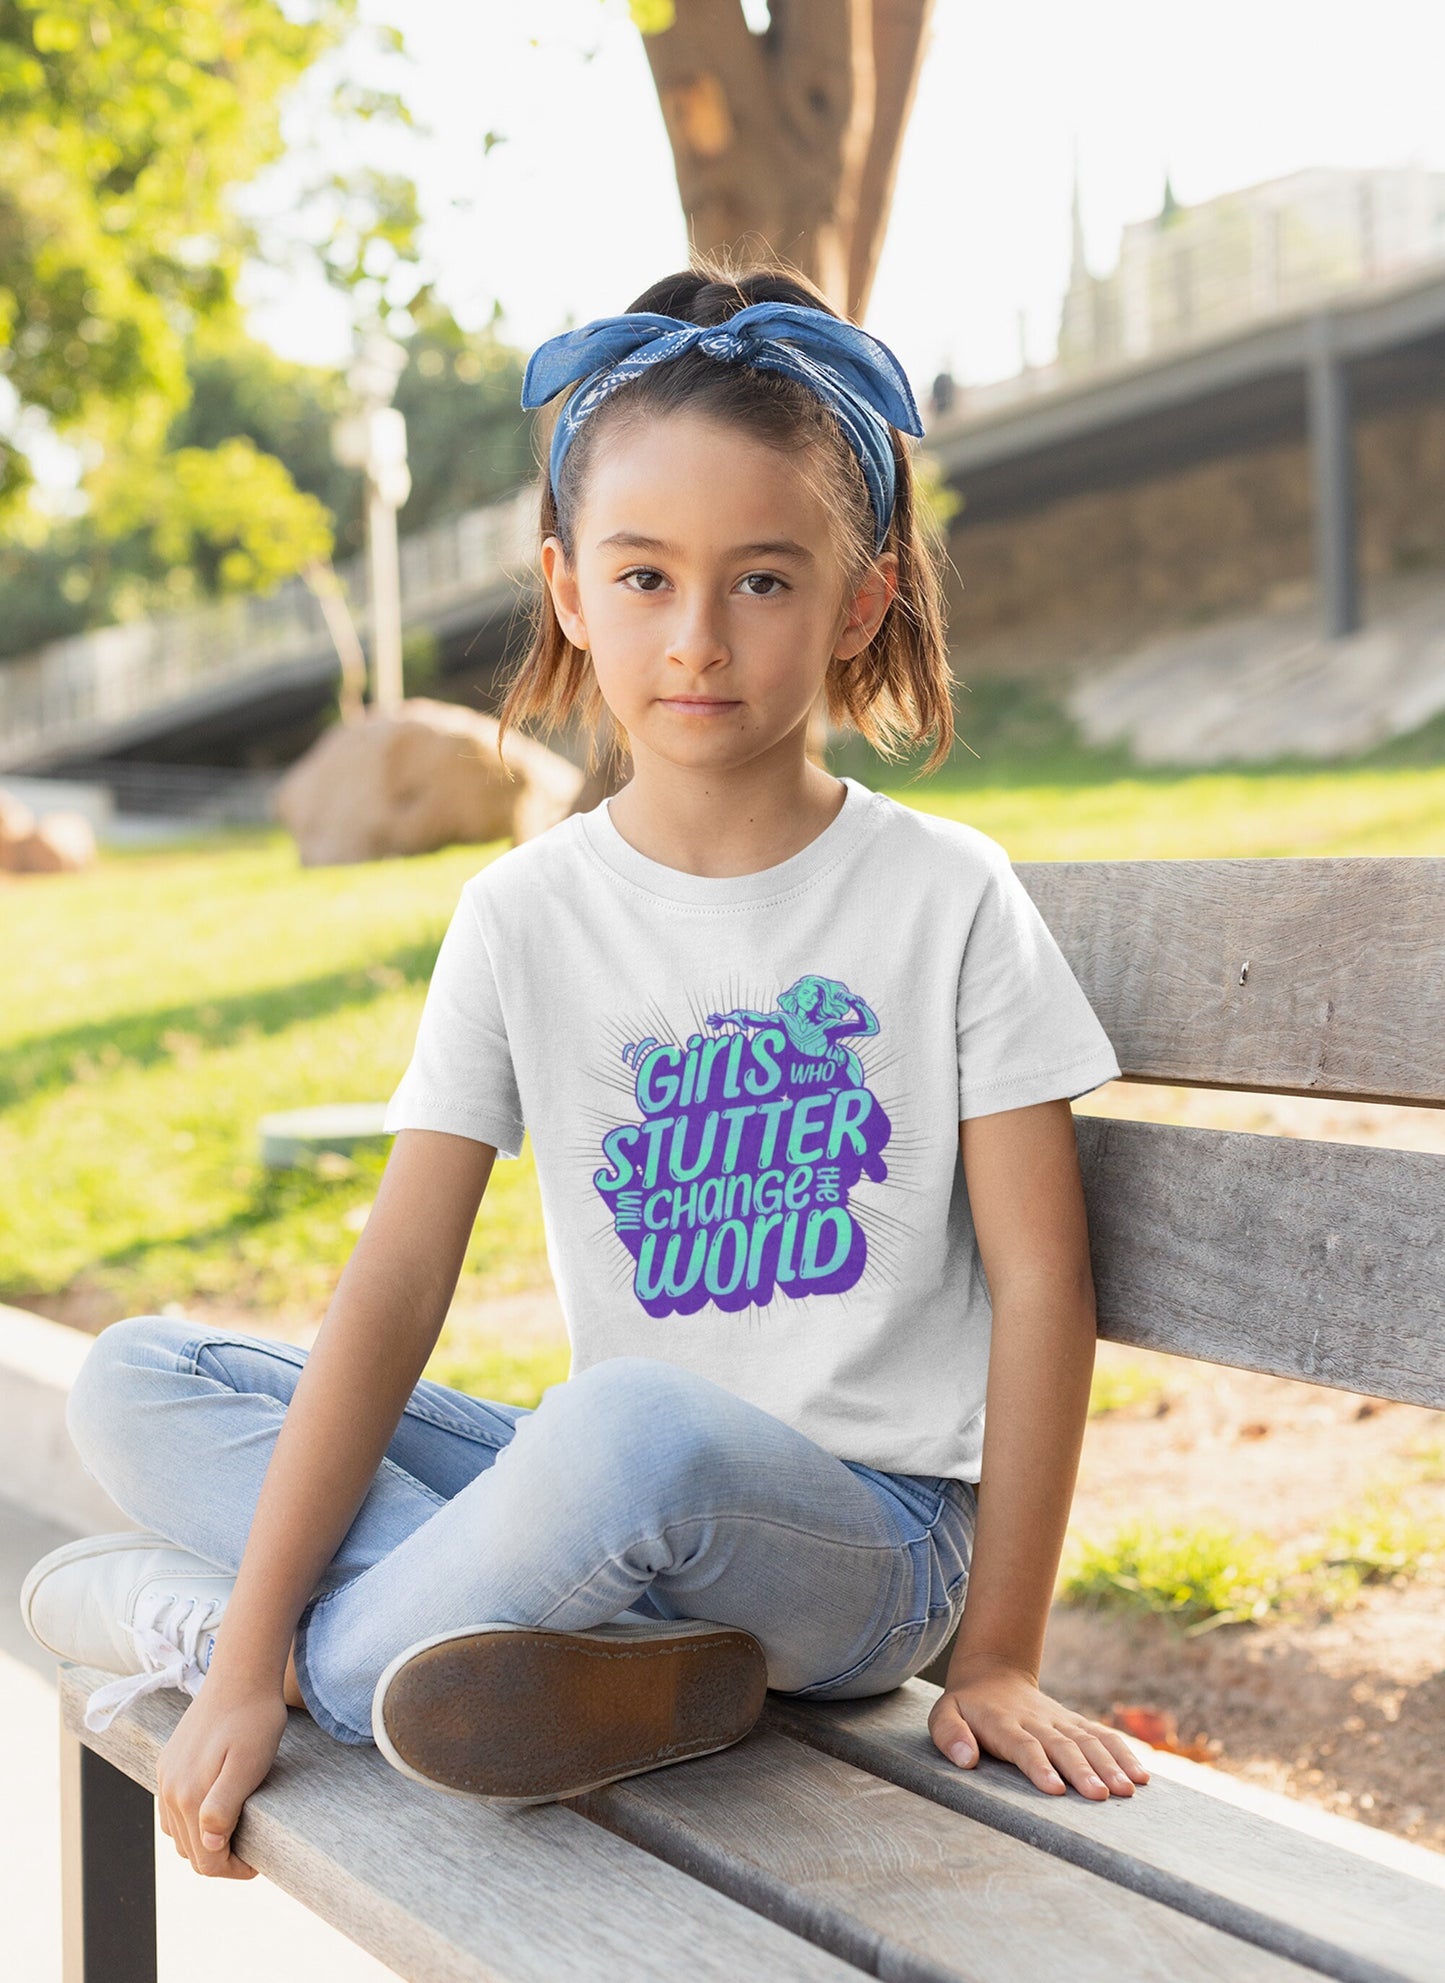 Girls Who Stutter Will Change the World Tshirt